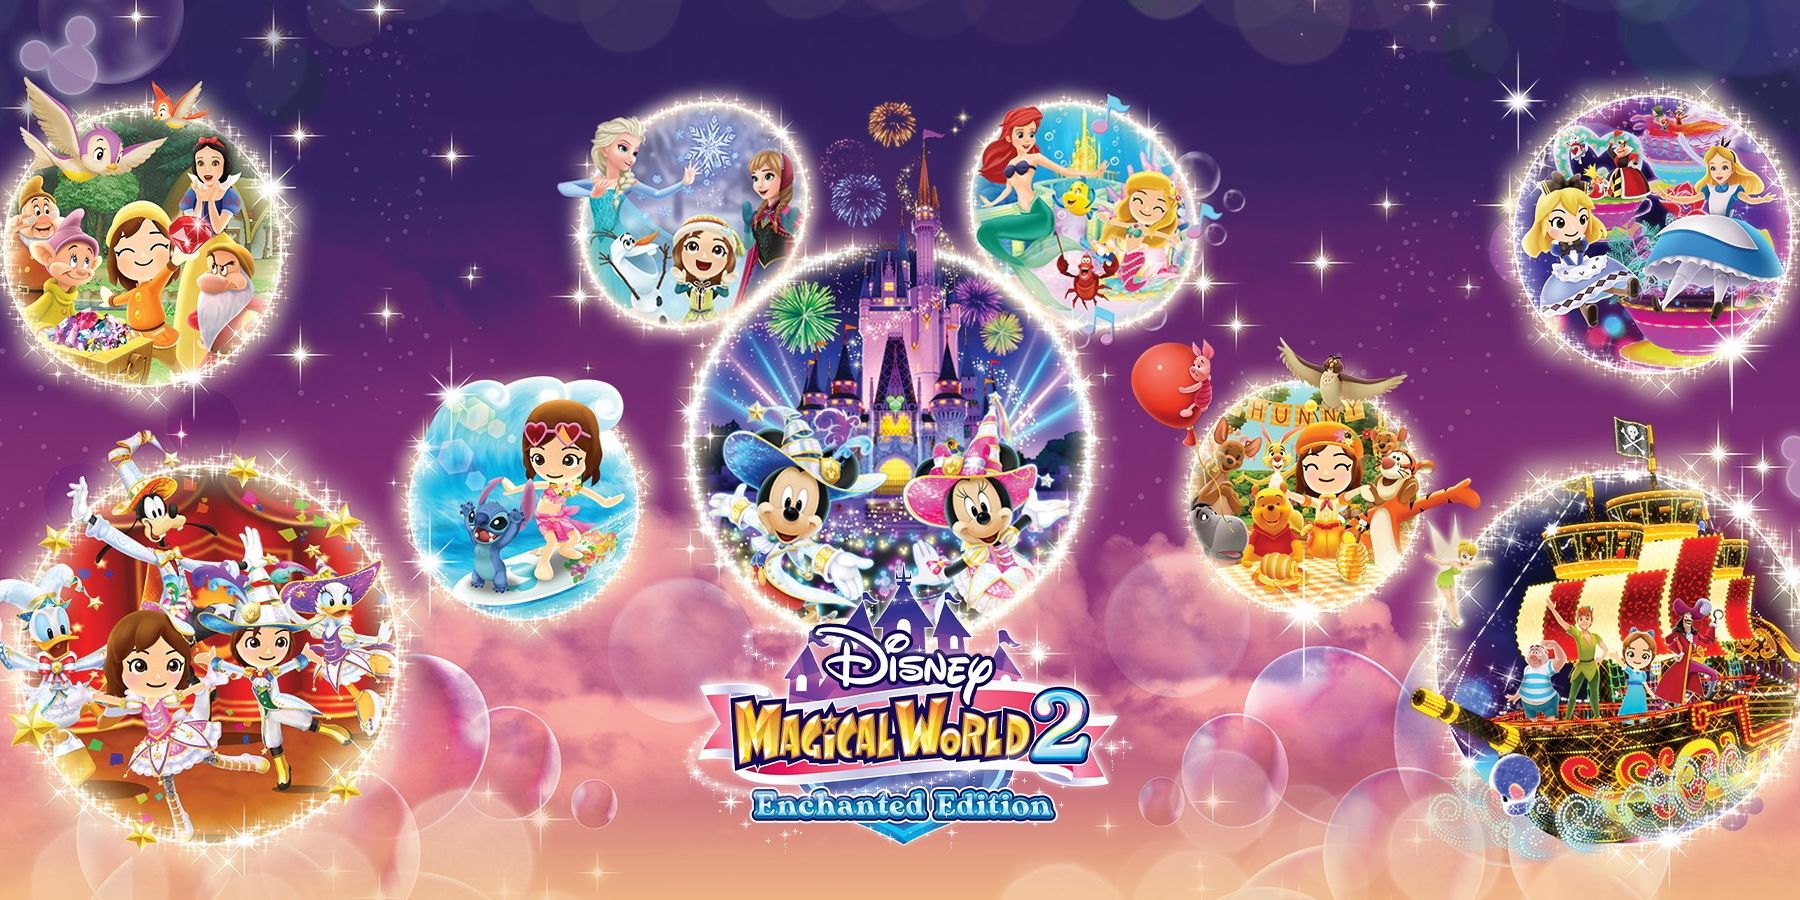 Disney Magical World 2: Enchanted Edition que viene a cambiar este año